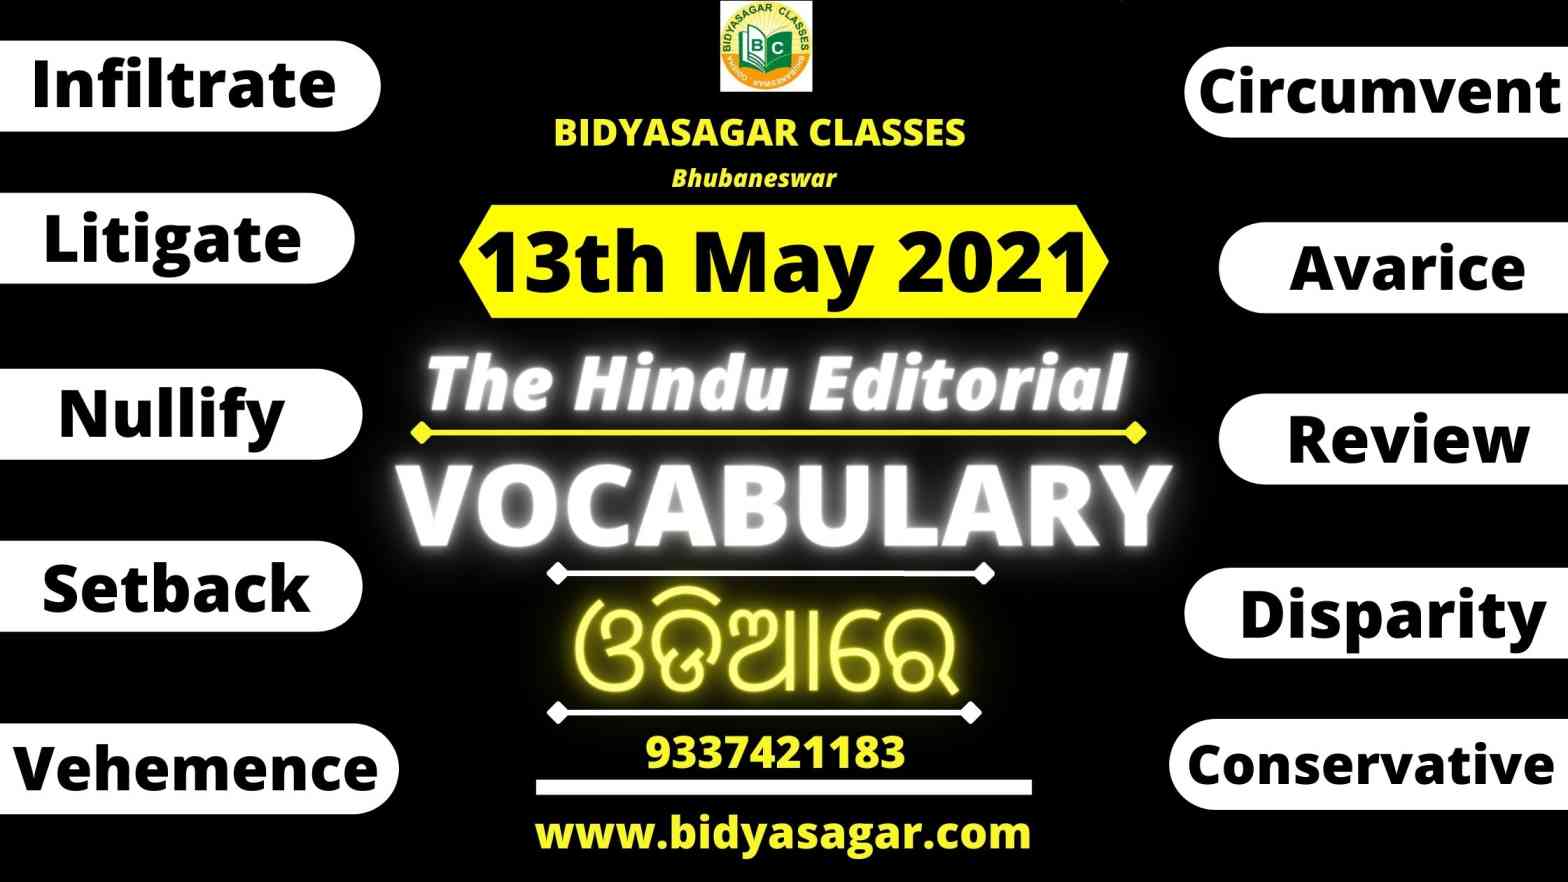 The Hindu Editorial Vocabulary of 13th May 2021